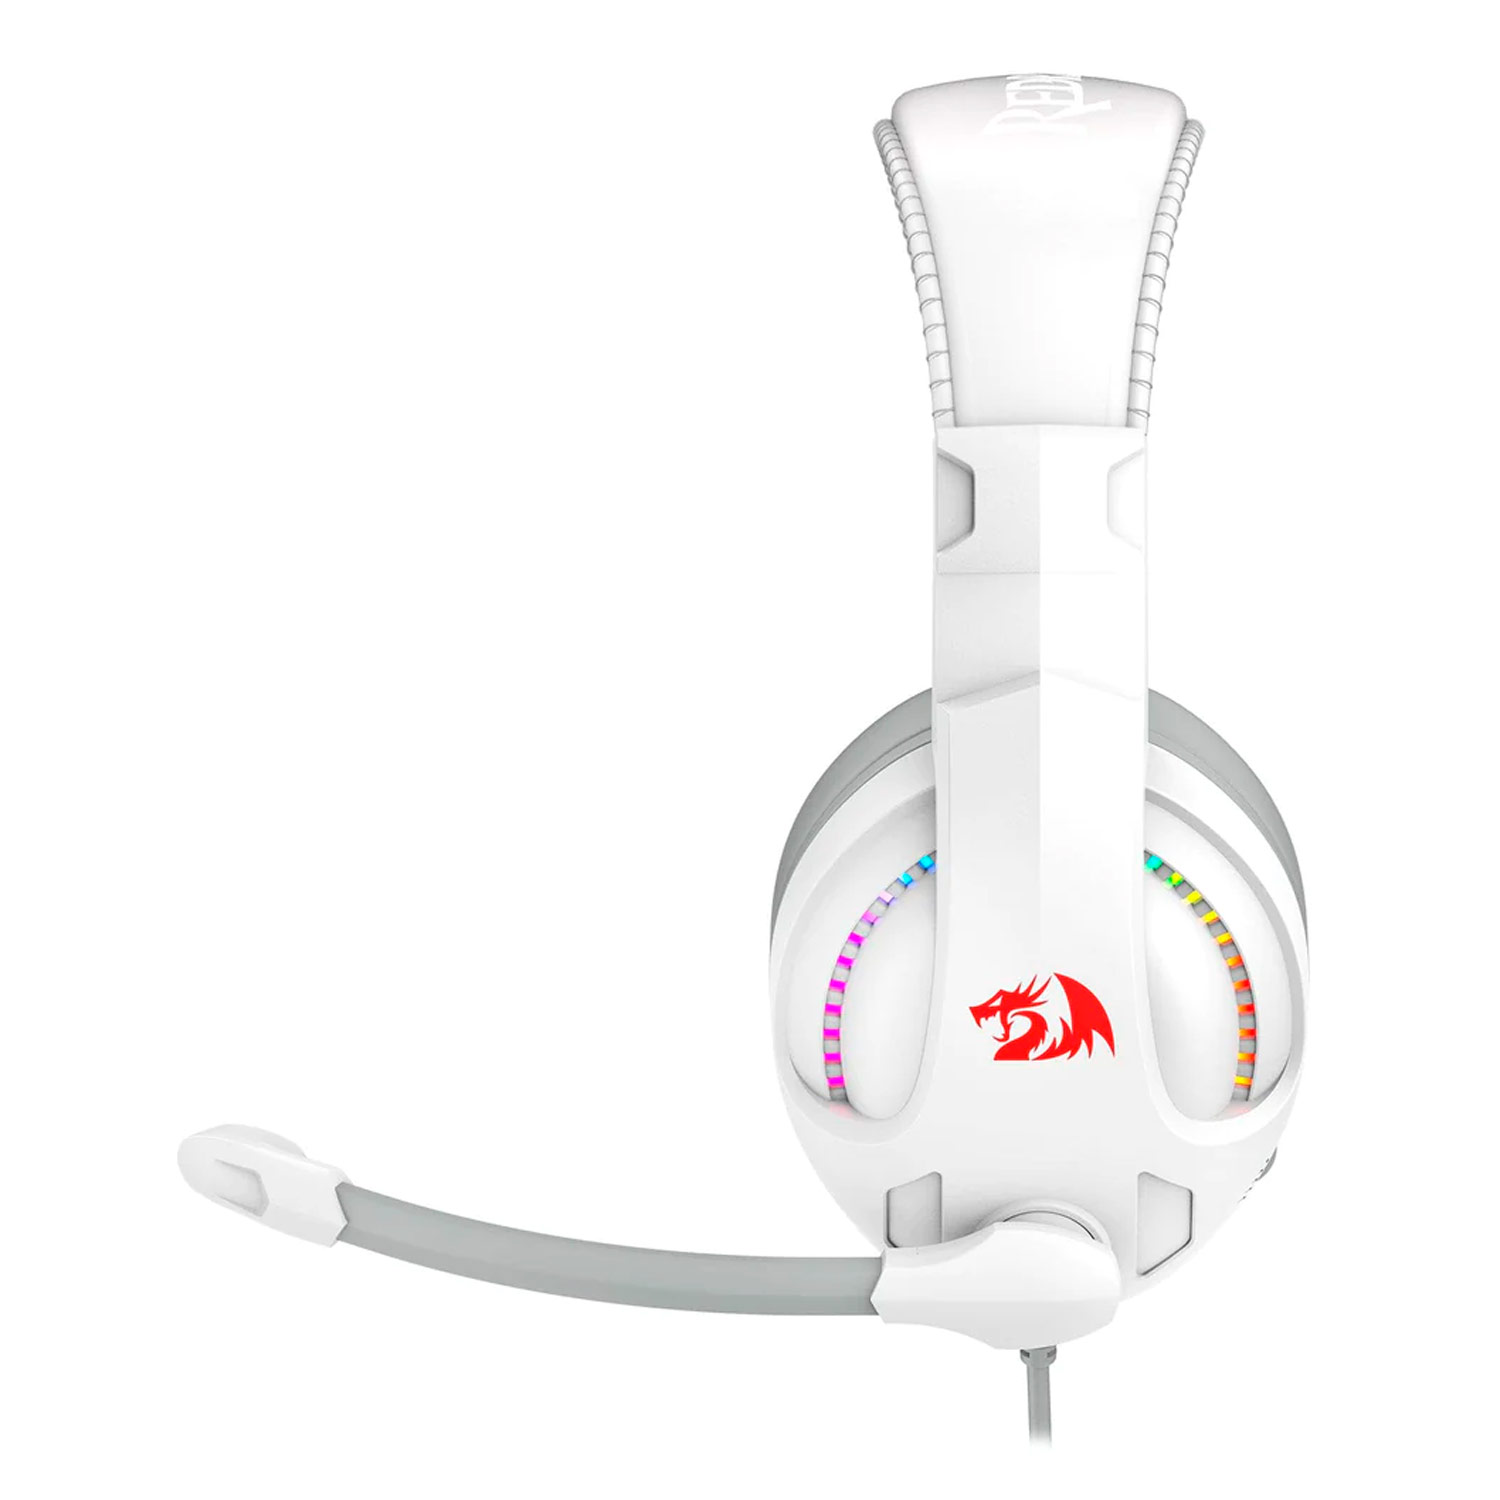 Headset Redragon Cronus H211W-RGB - Branco

